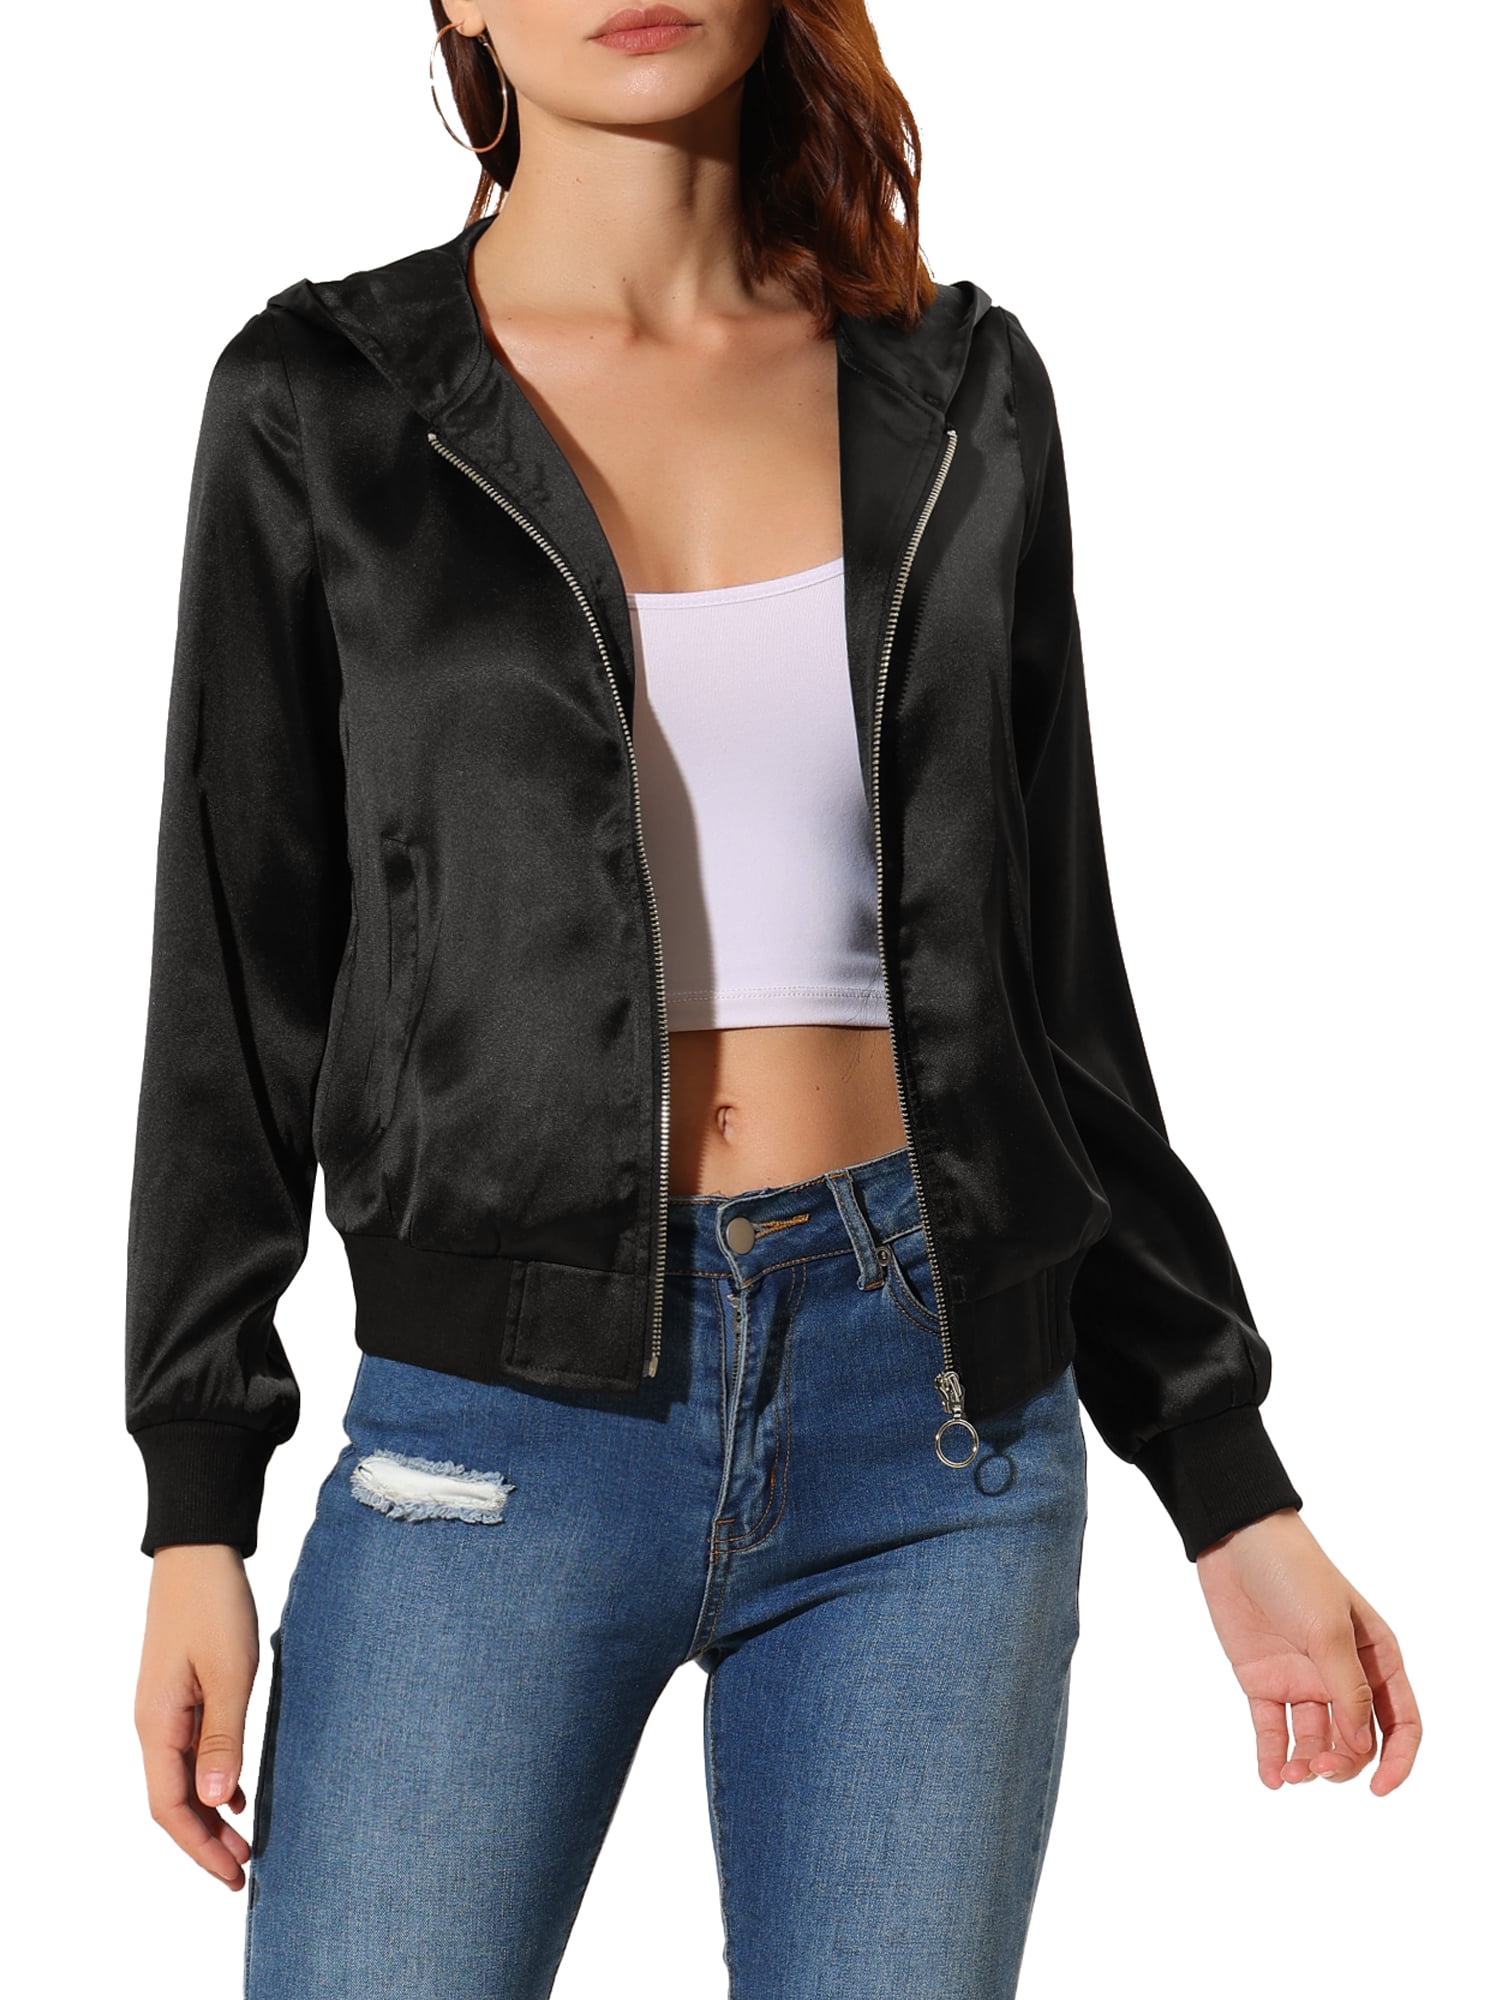 andy & natalie Women's Bomber Jacket Long Sleeve Zip up Raglan Bomber Jacket  with Pockets at Amazon Women's Coats Shop